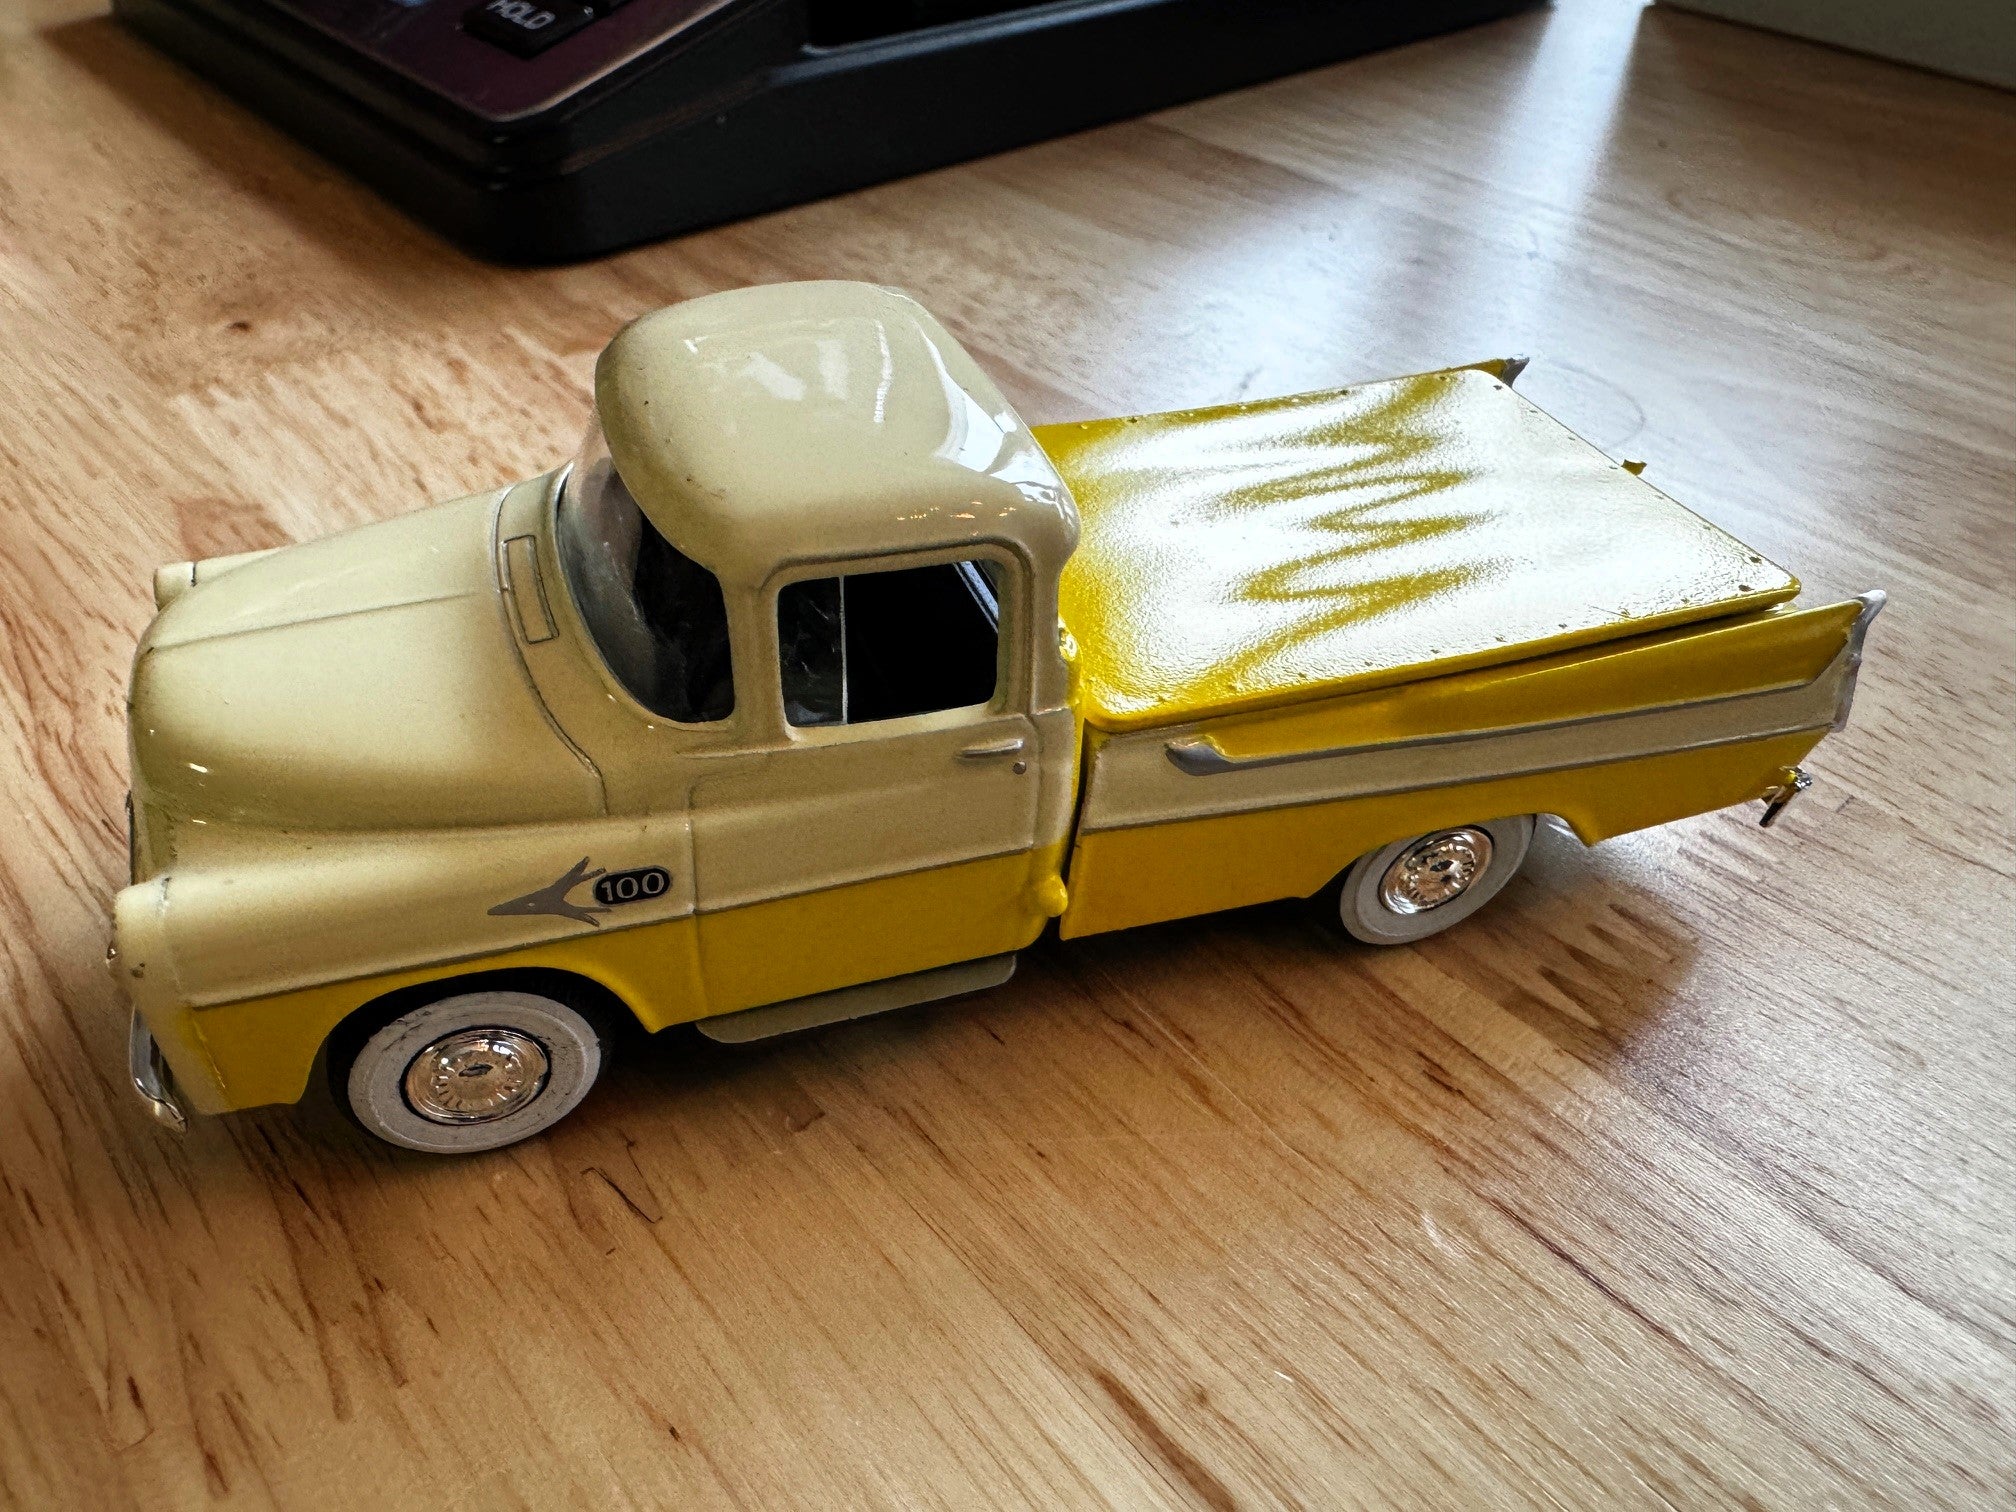 1957 Dodge Sweptside Truck (Yellow/Cream) 1/48 Diecast Car